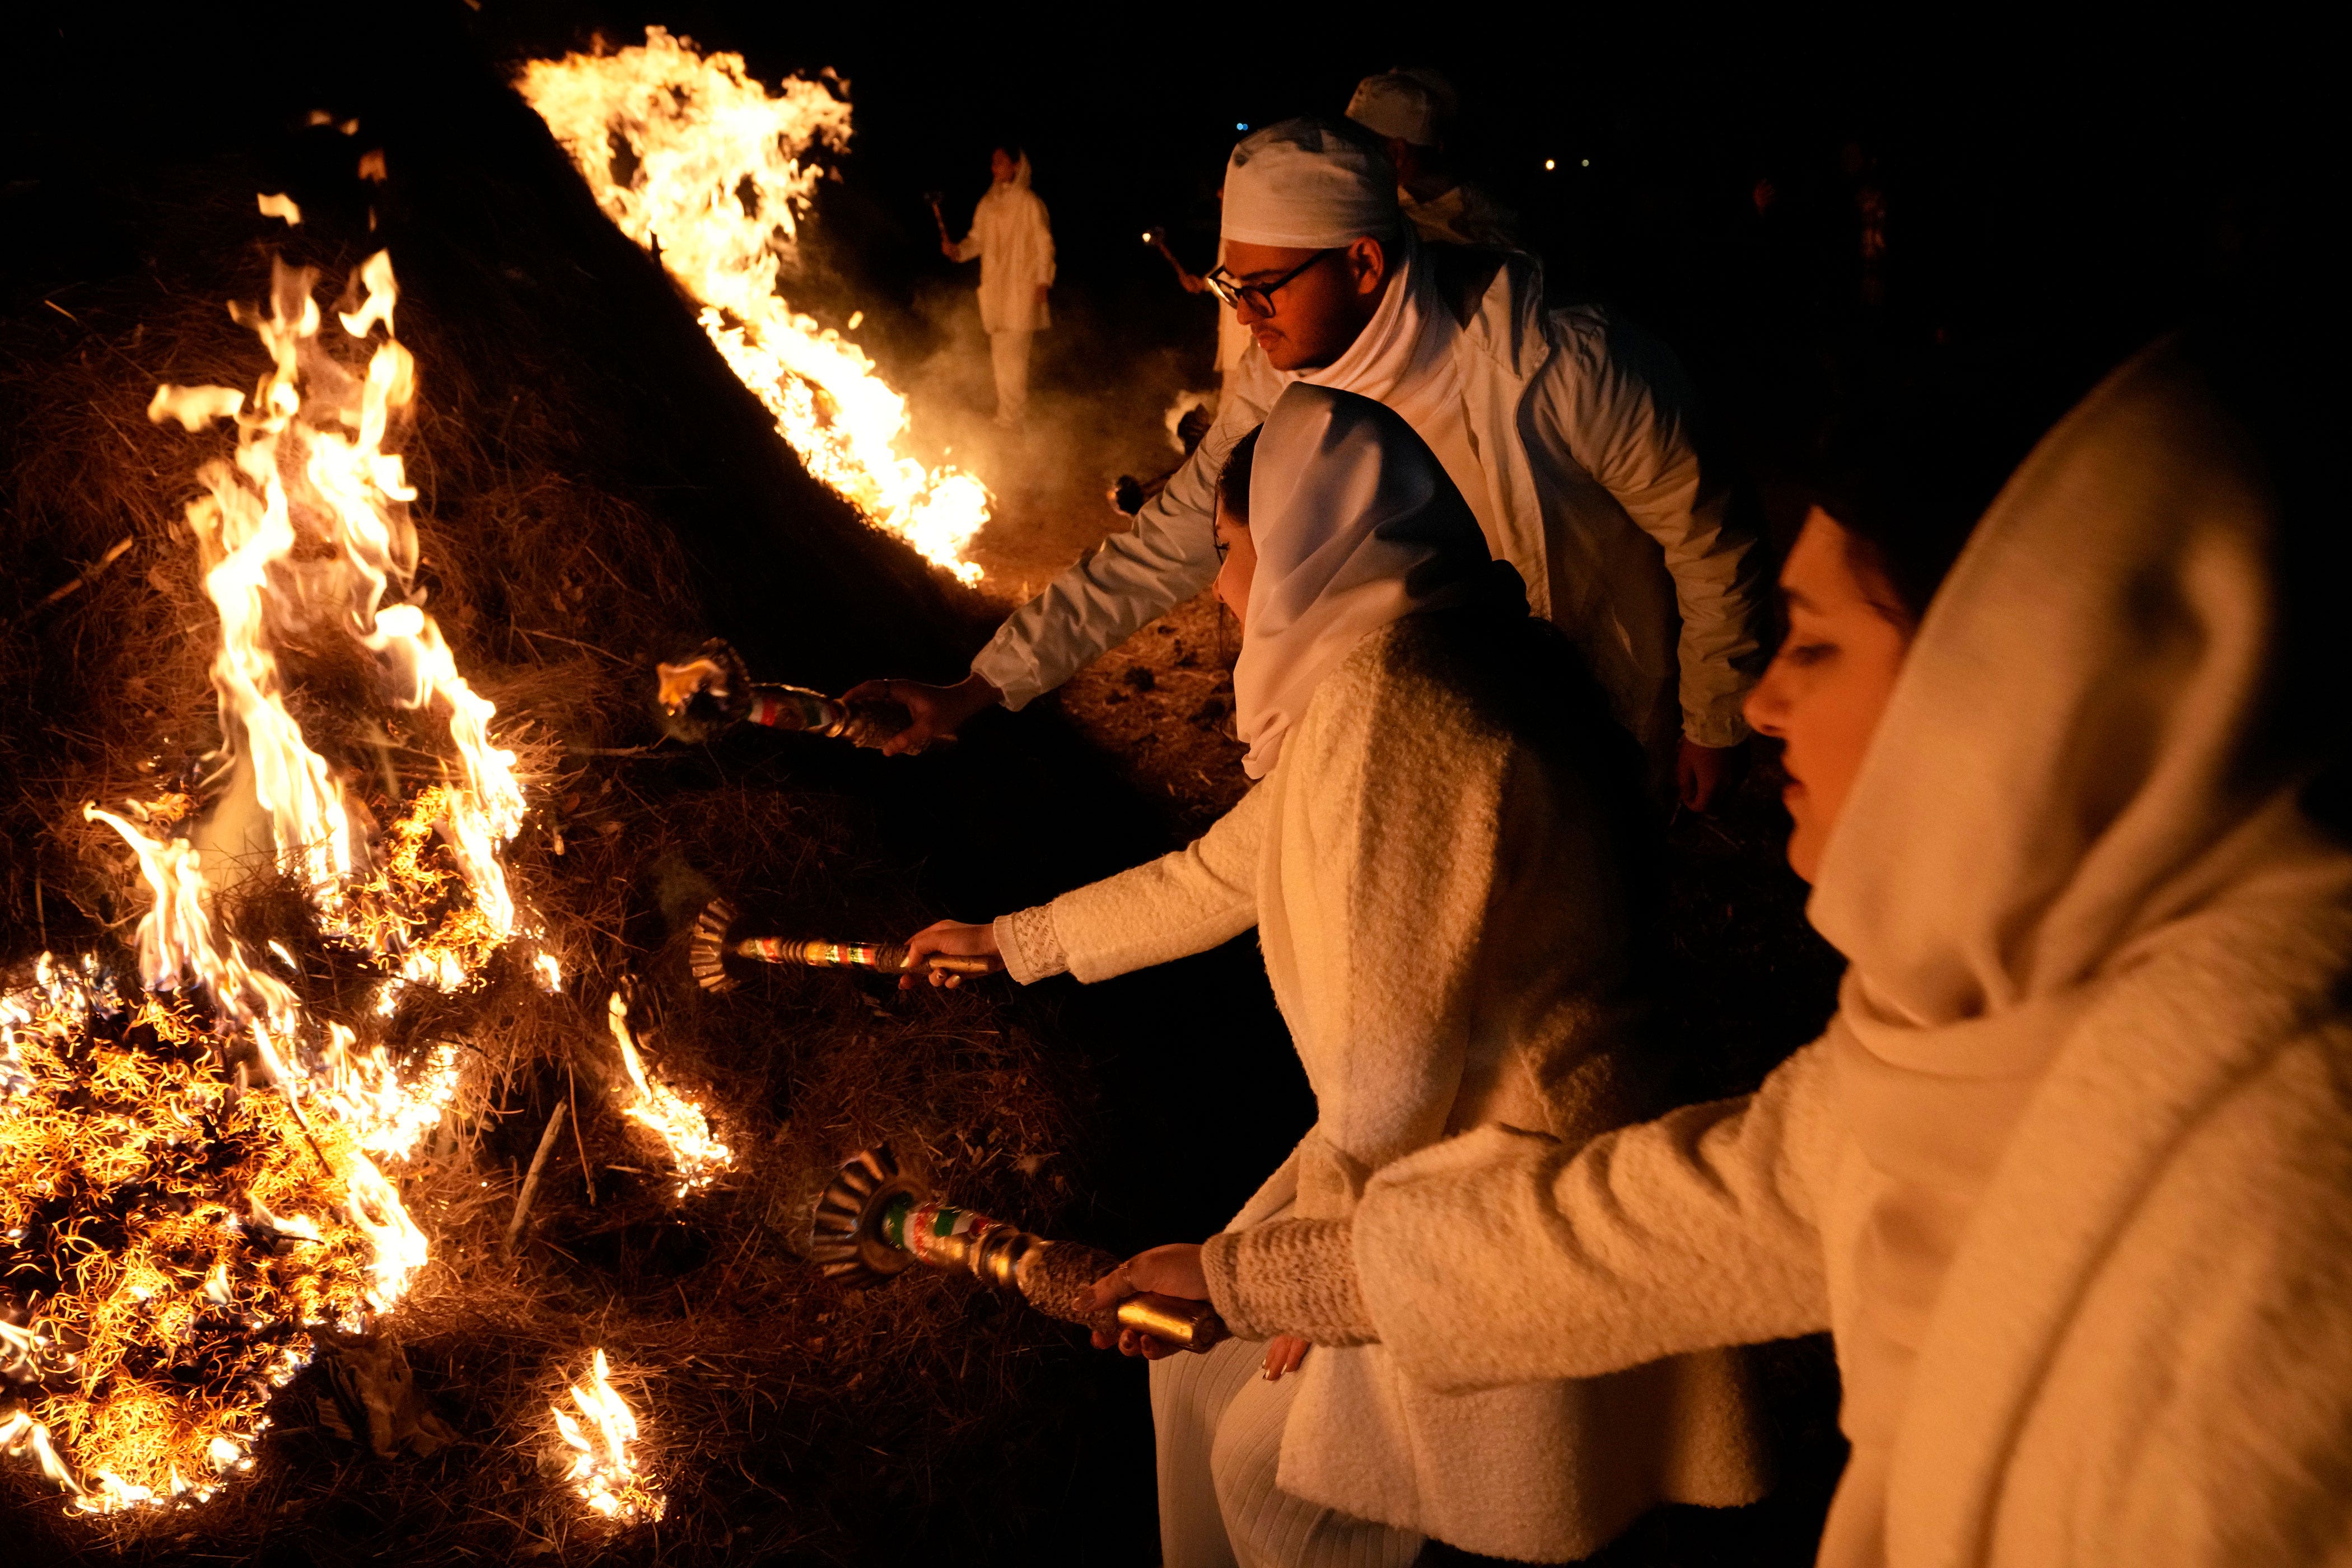 Iran's minority Zoroastrians celebrate Sadeh with bonfire festival